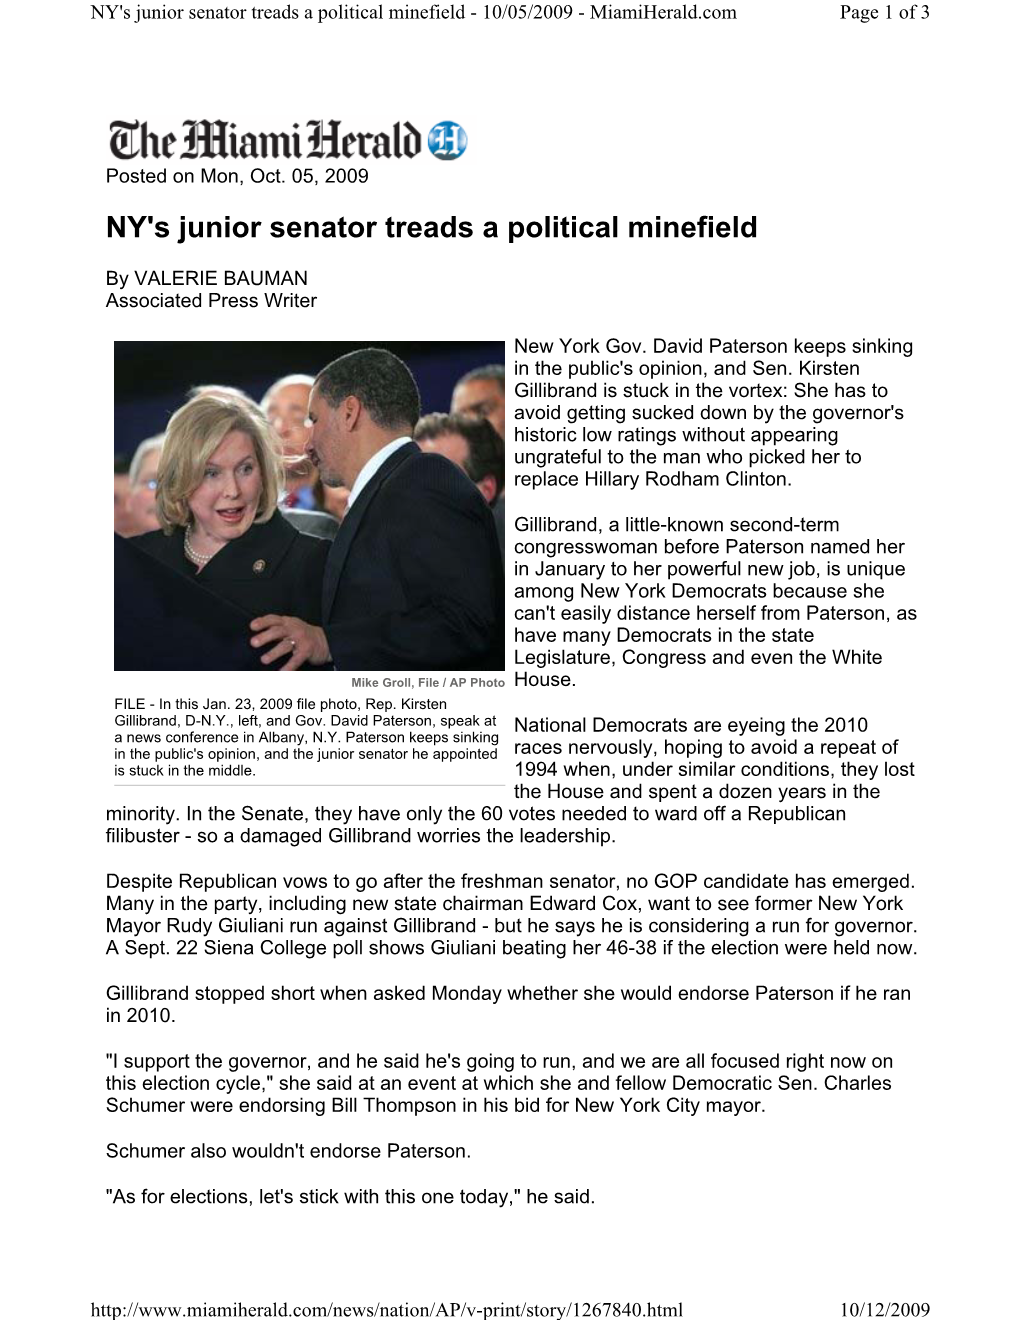 NY's Junior Senator Treads a Political Minefield - 10/05/2009 - Miamiherald.Com Page 1 of 3